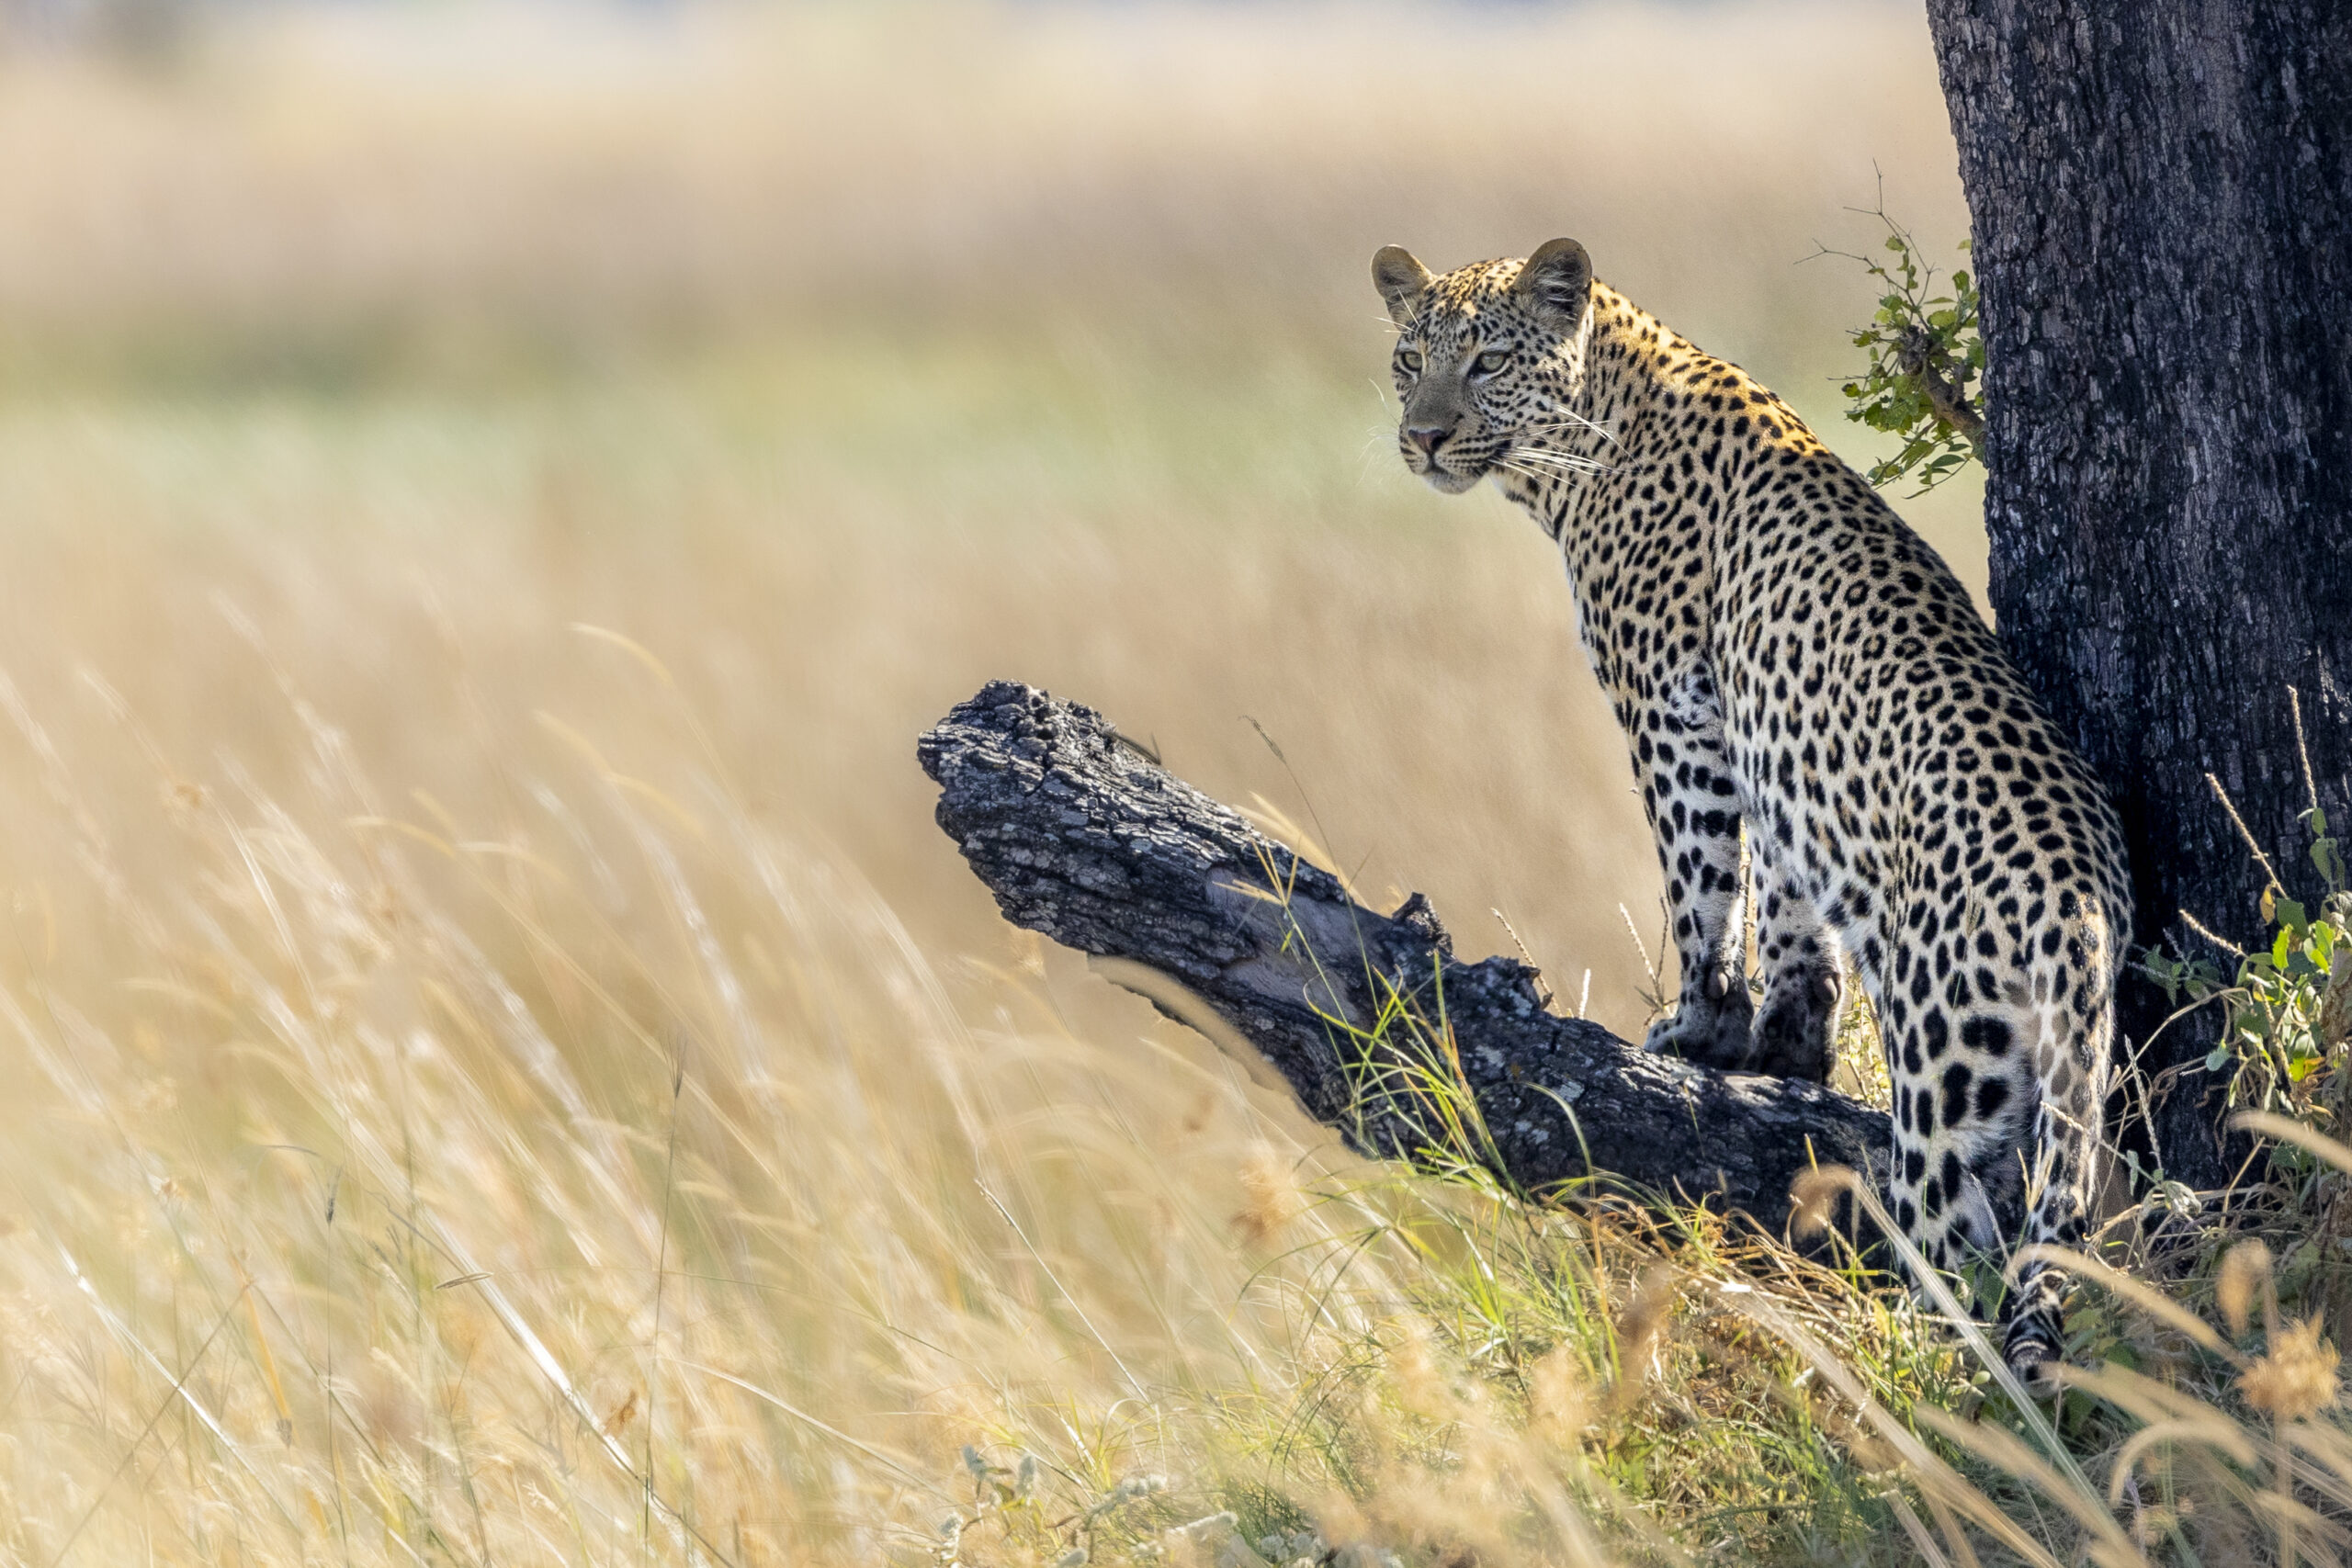 Gorgeous Leopard image by Pangolin Photo Host Janine Krayer.